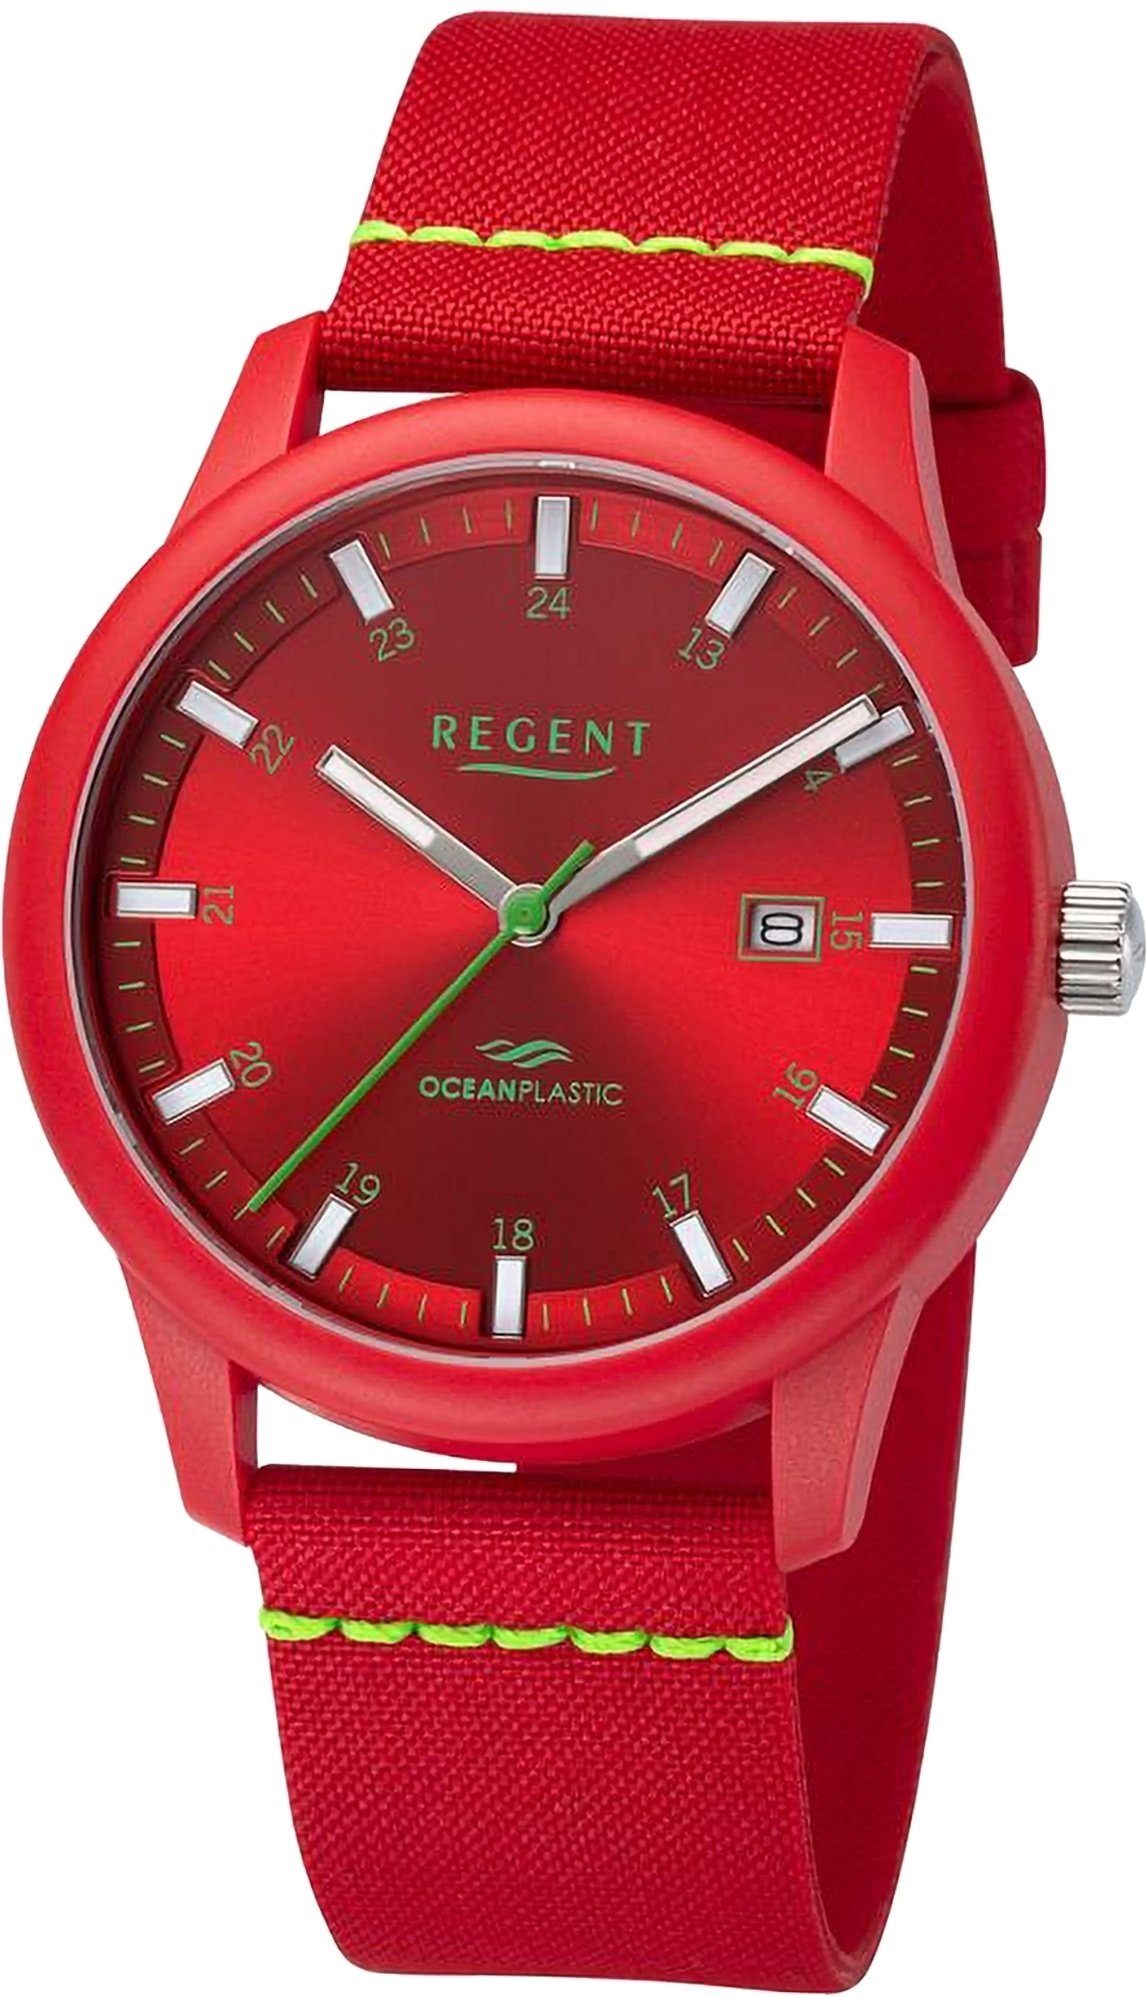 Herren Armbanduhr Armbanduhr (ca. Herren Quarzuhr groß extra rund, 40mm), Nylonarmband Regent Analog, Regent